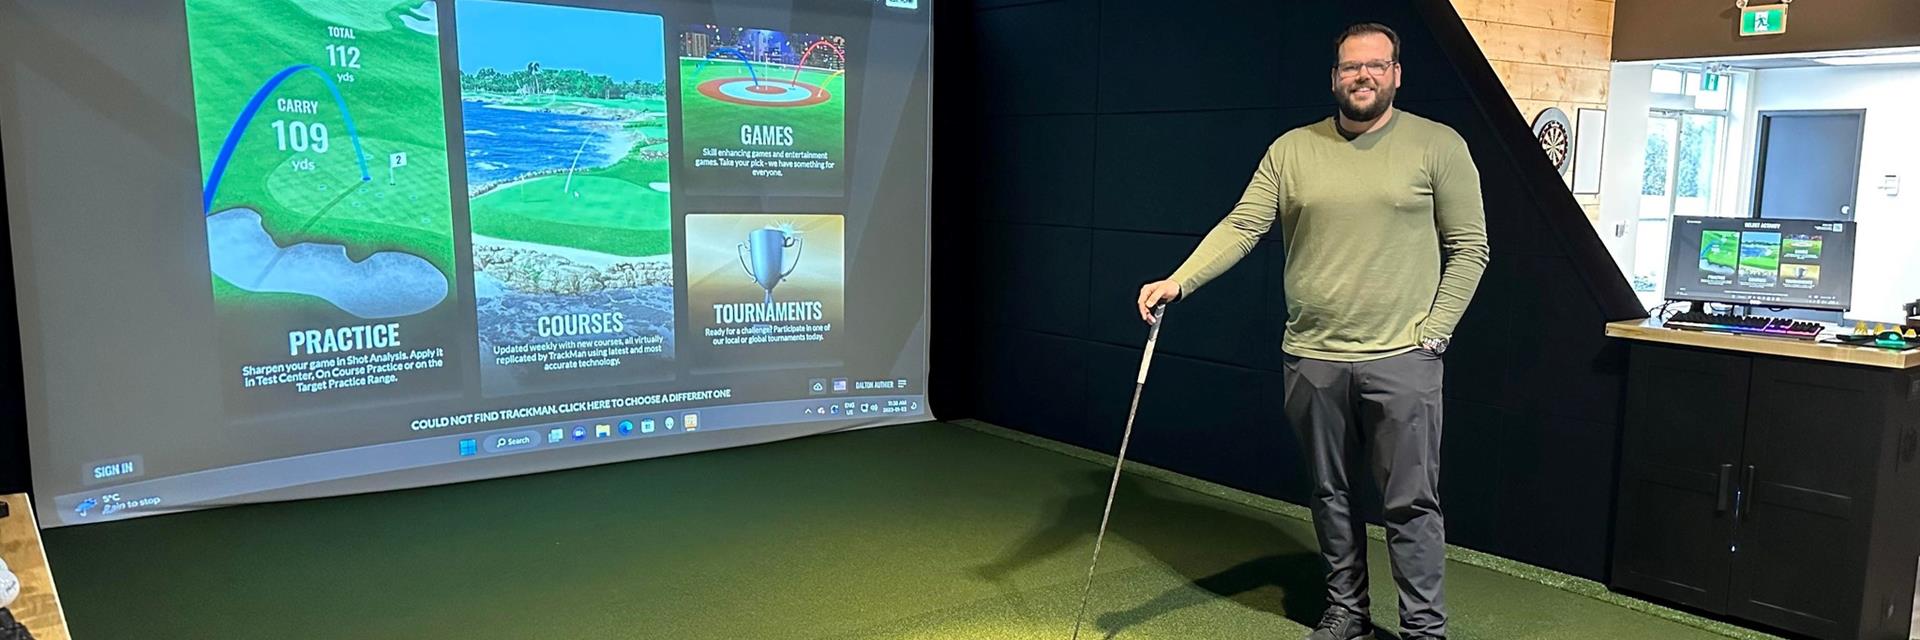 indoor golf screen with golfer